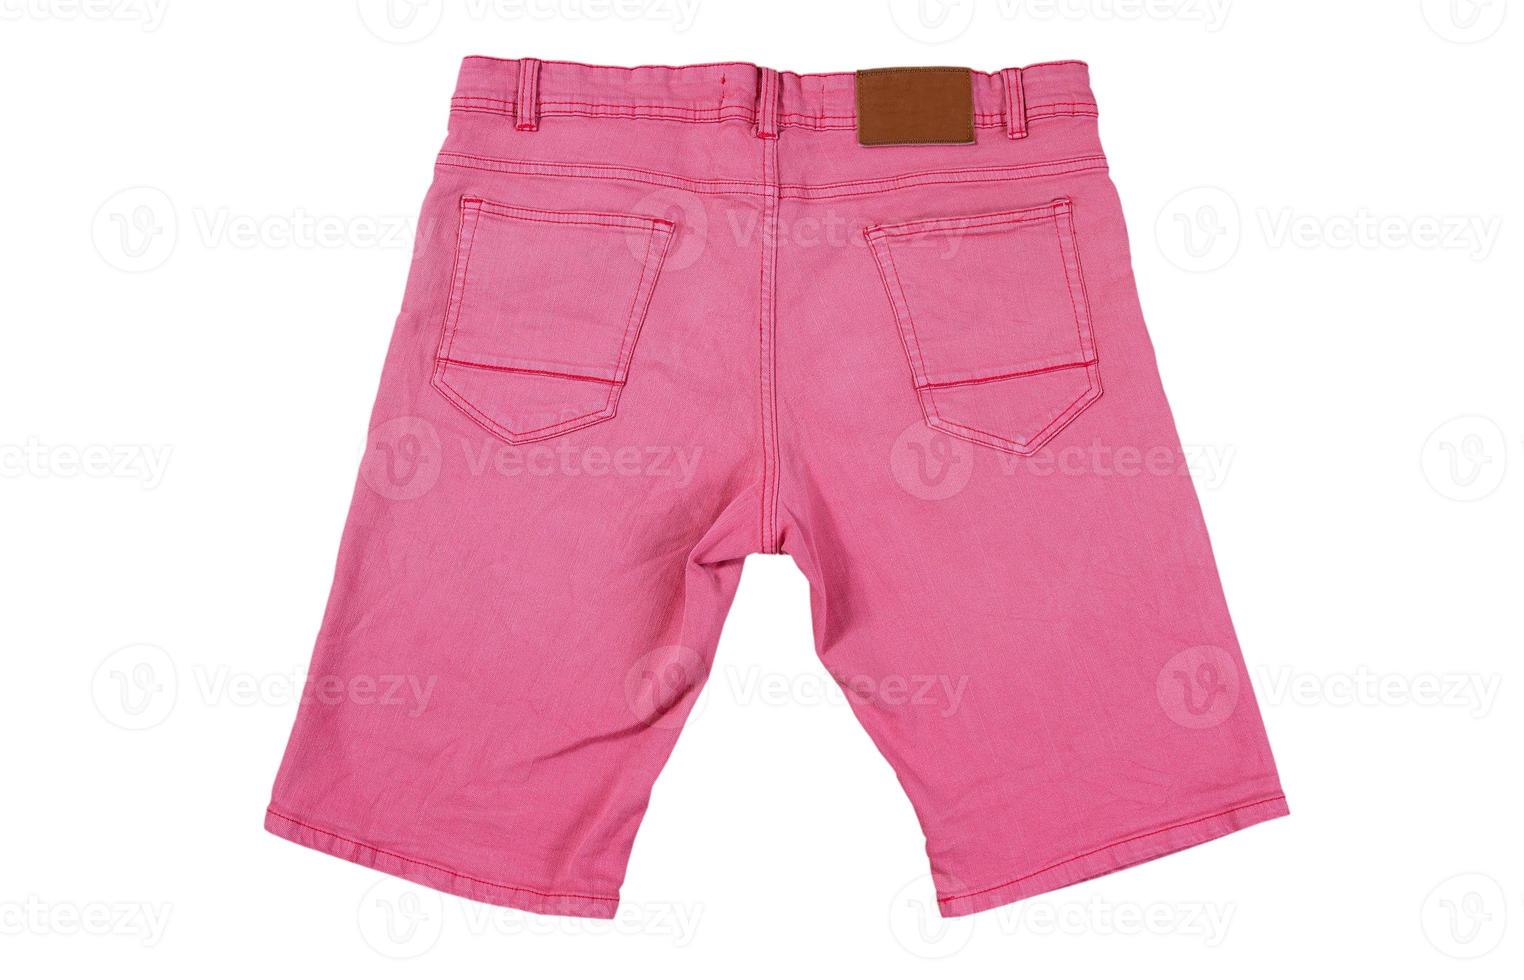 roze shorts achteraanzicht op witte achtergrond, roze jeans shorts geïsoleerd over white foto